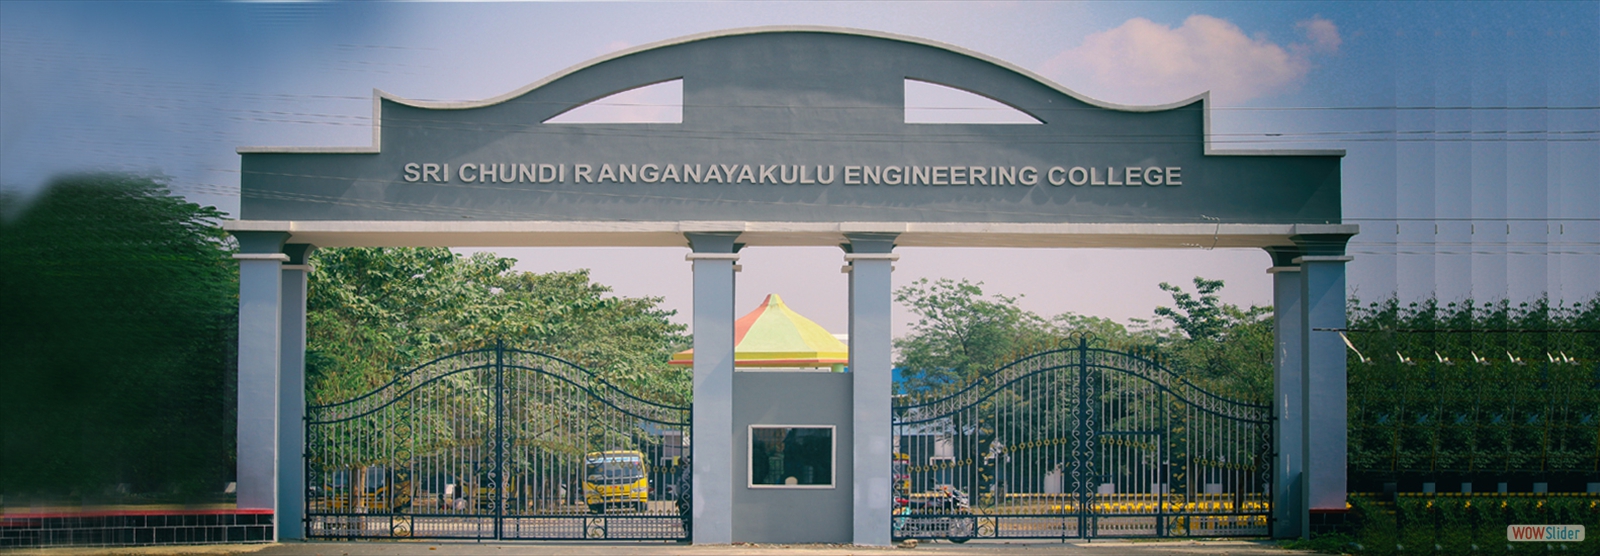 Sri Chundi Ranganayakulu Engineering College